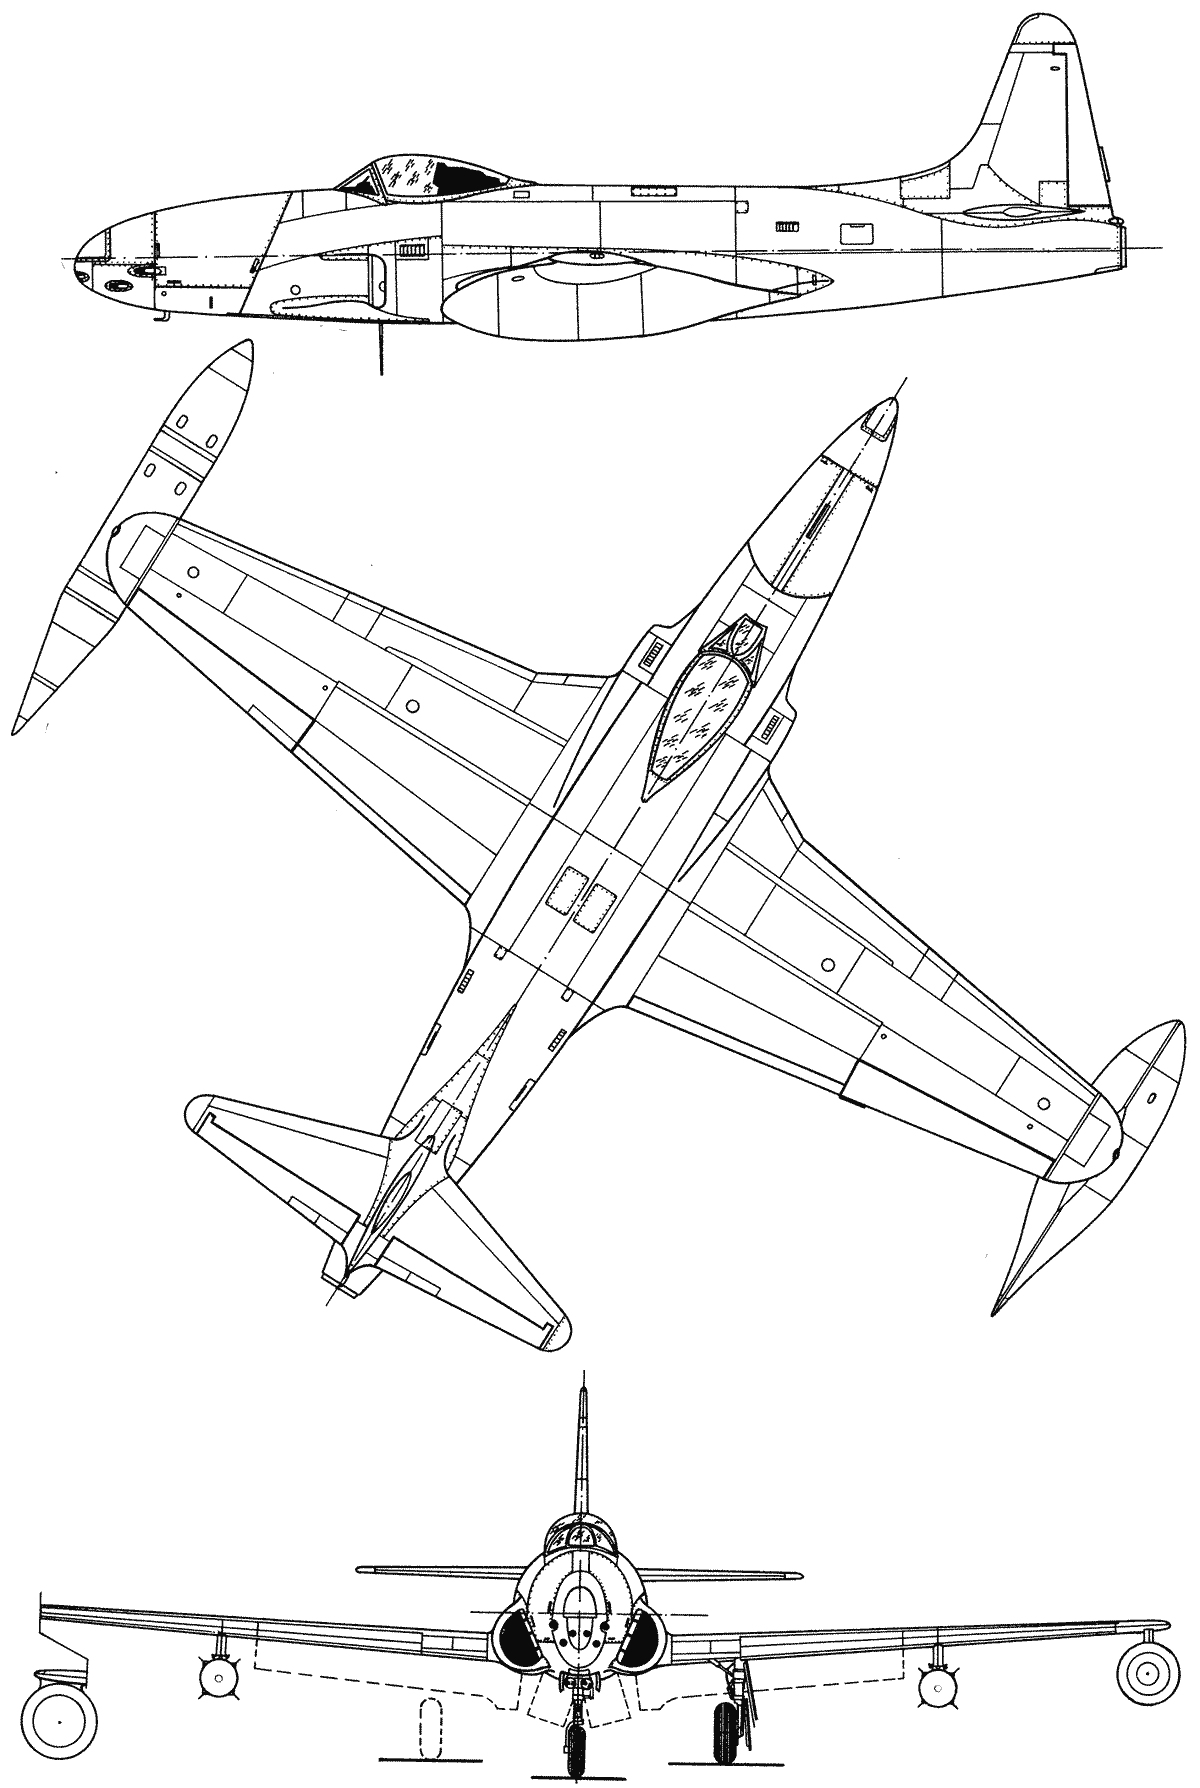 P-80 Shooting Star blueprint